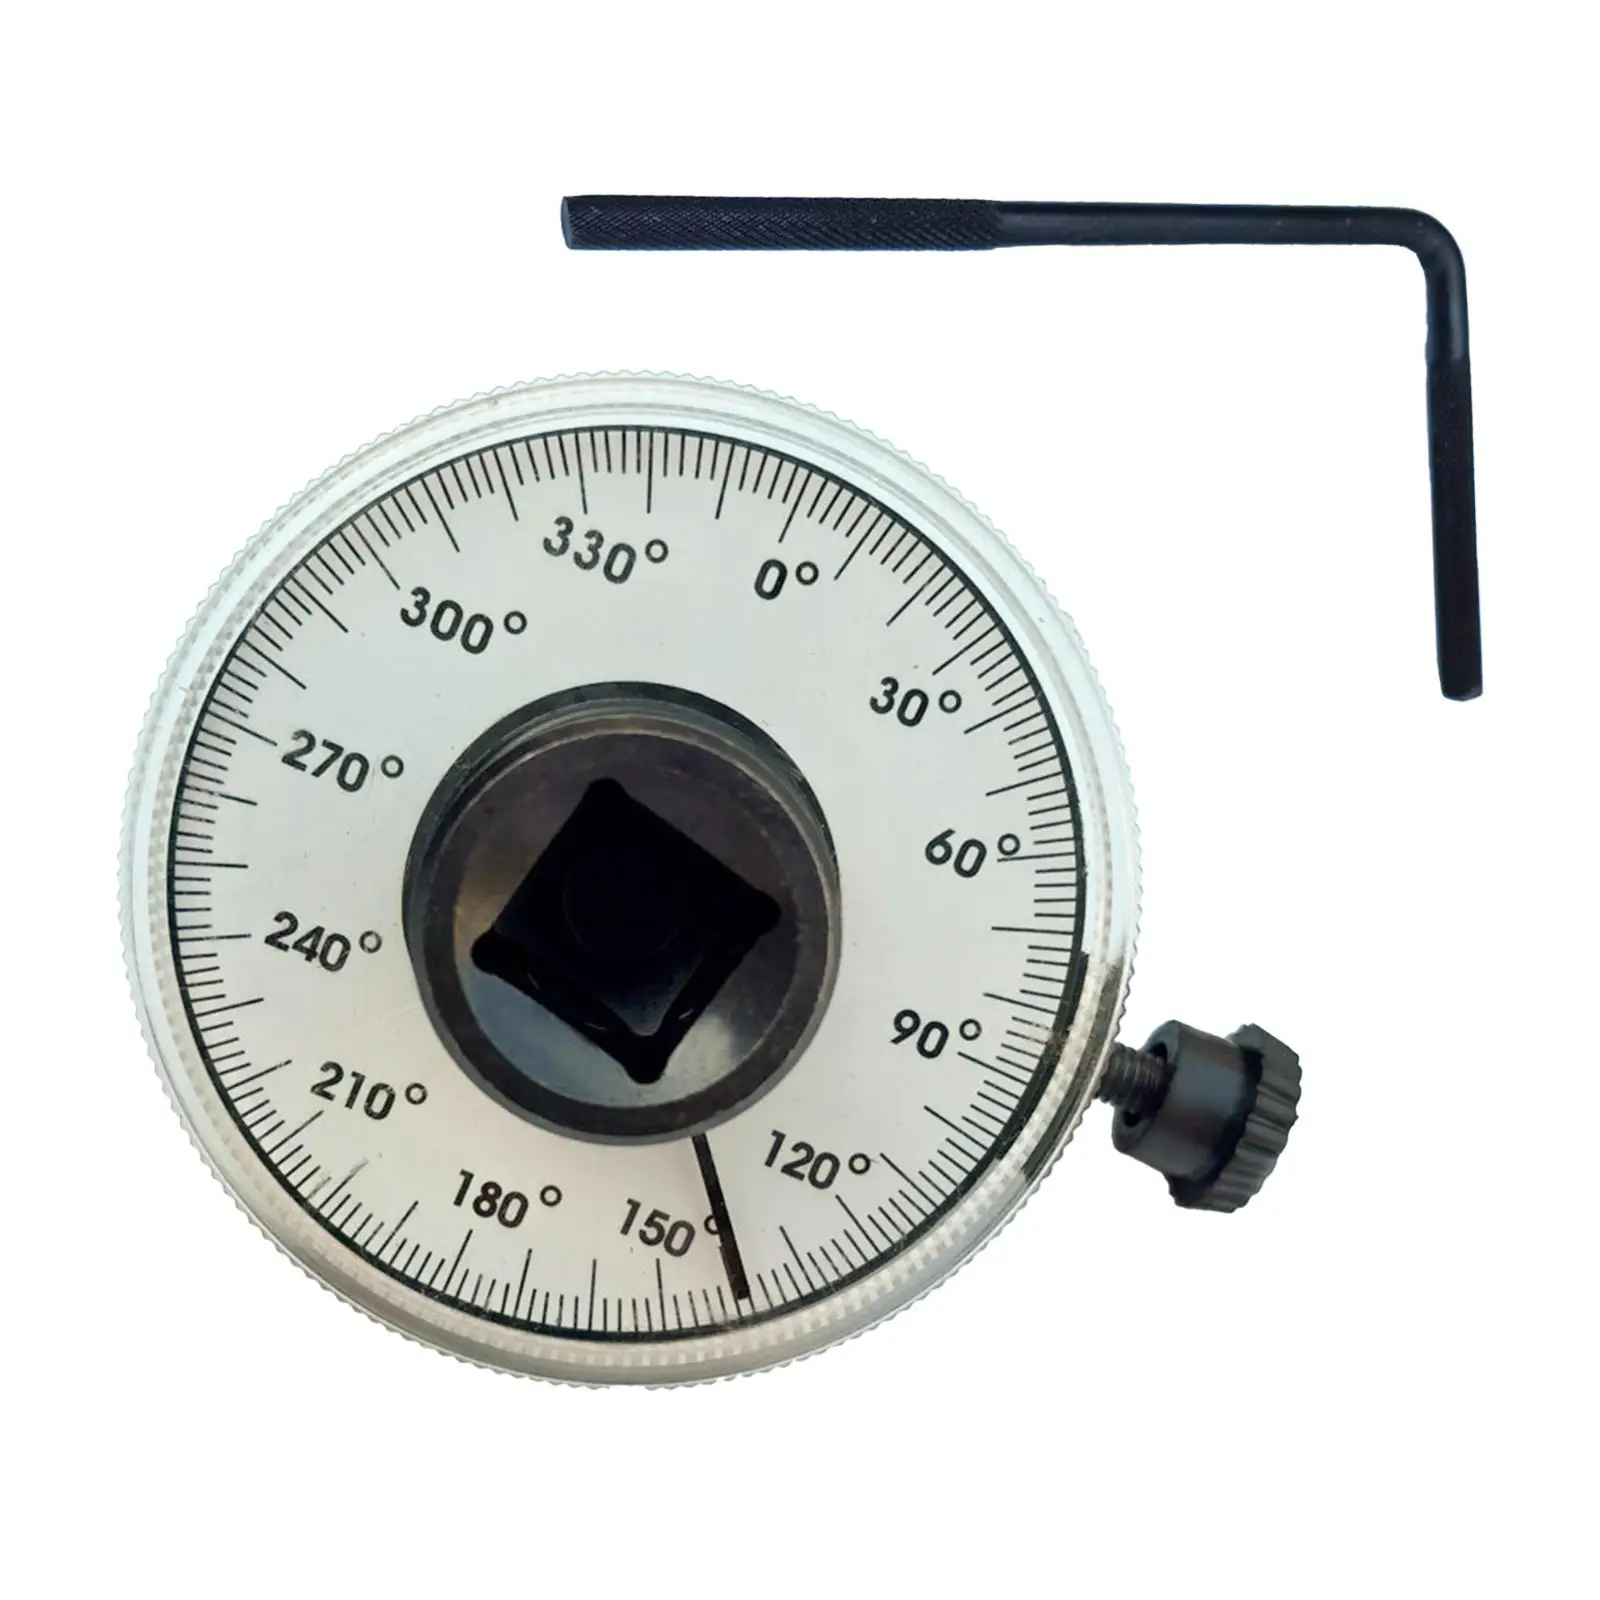 Magnetic Torque Angle Meter Rotation Tester Garage Tool Check Meter Durable 360°Adjustable Premium 1/2